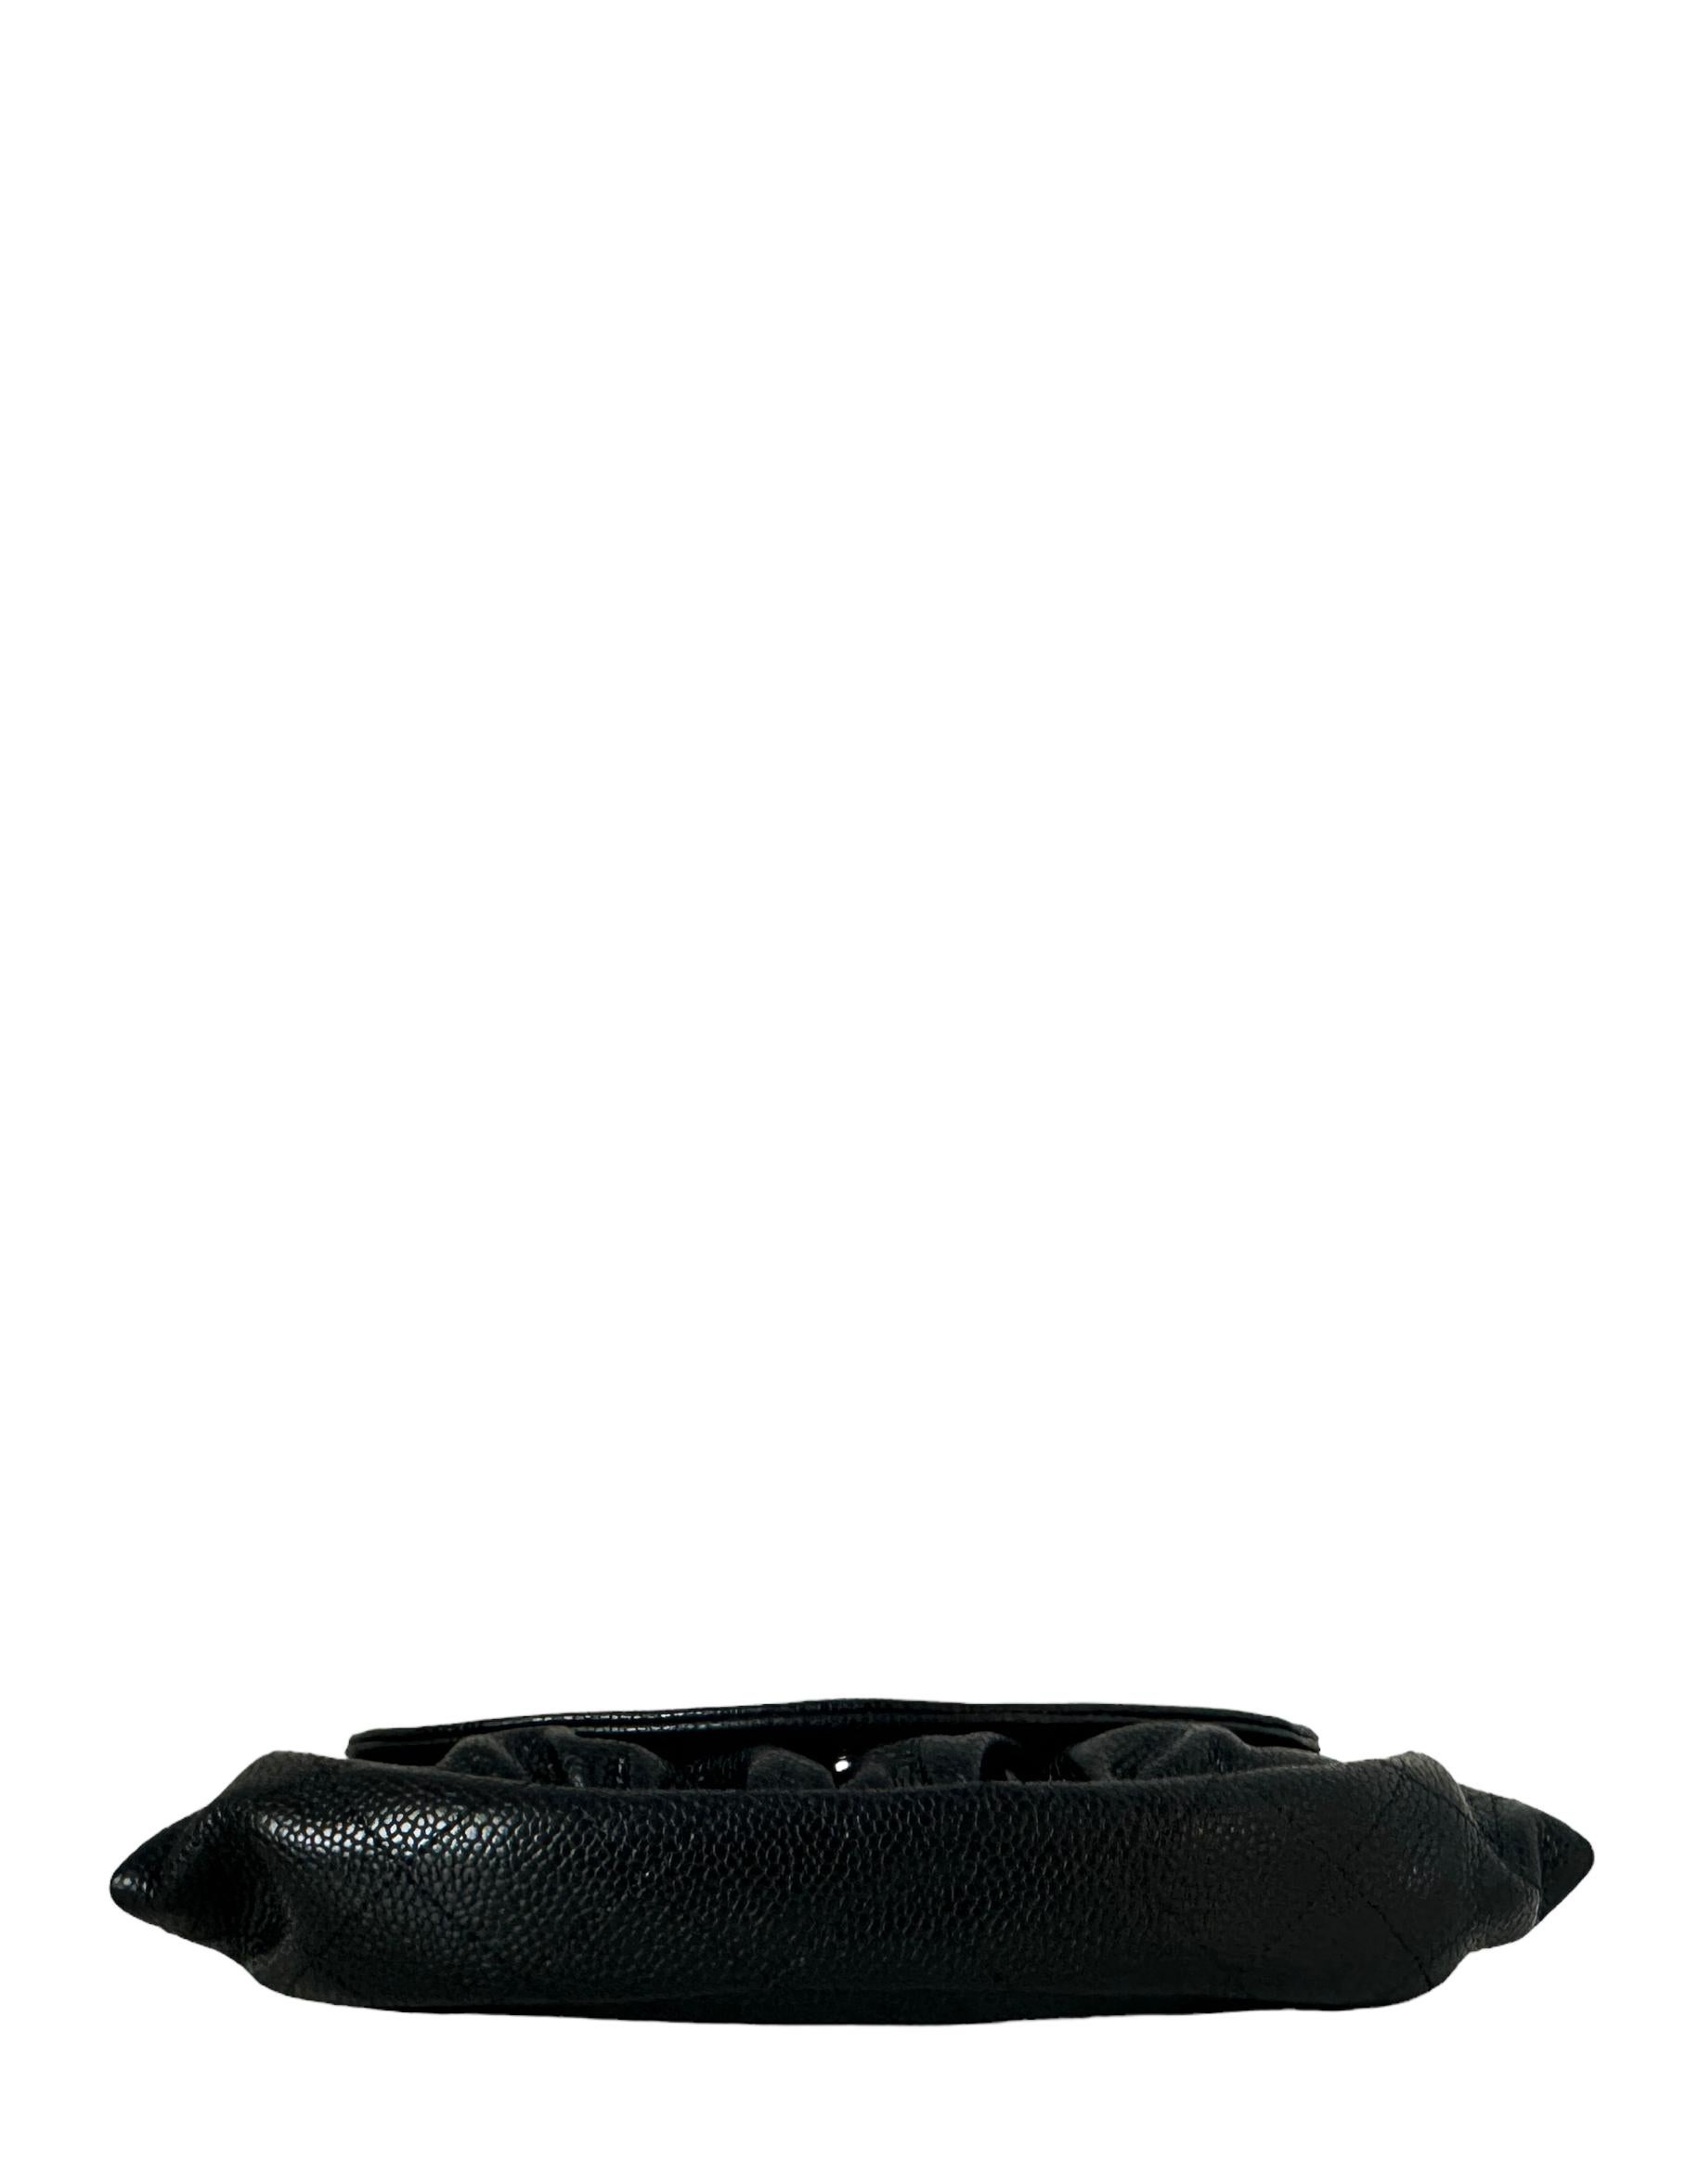 Chanel Black Caviar Leather Half Moon Wallet On Chain WOC Crossbody Bag Pour femmes en vente